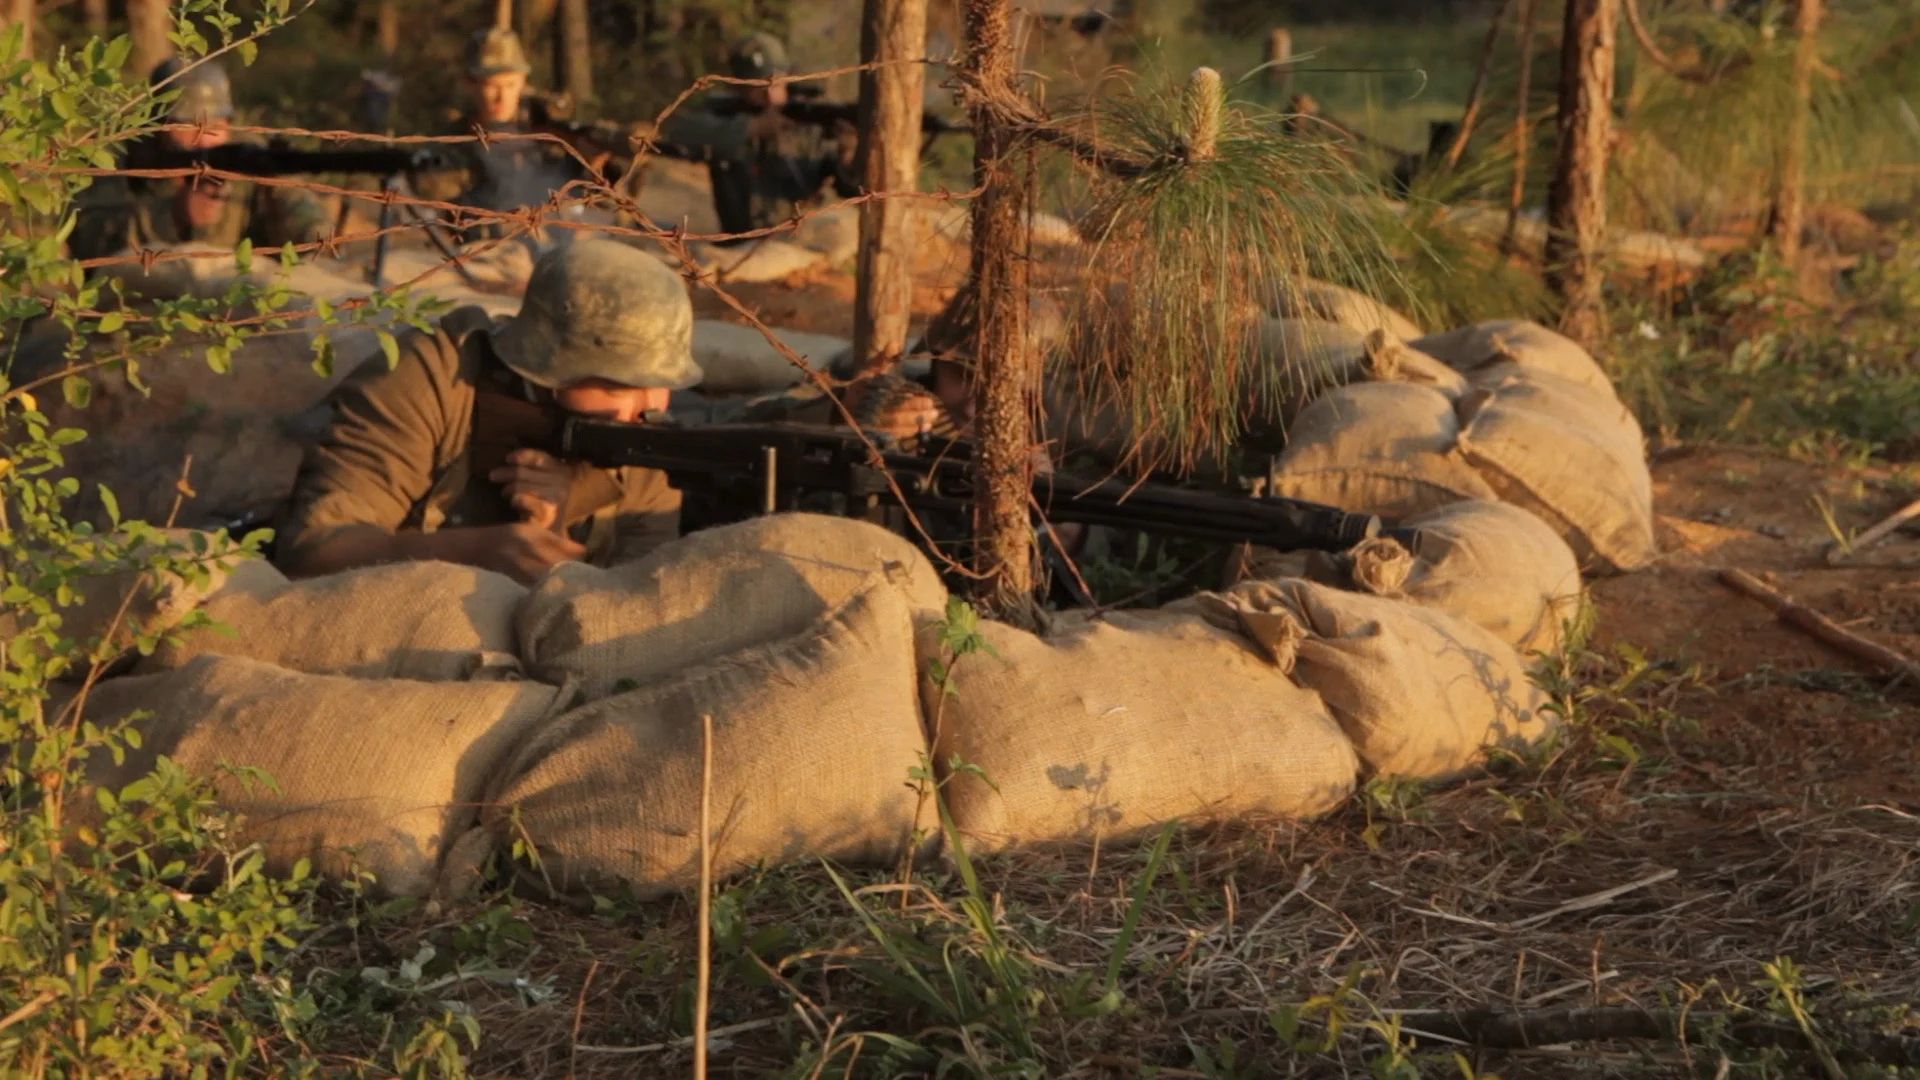 MG42 & Girl Red BG | A Military Photos & Video Website